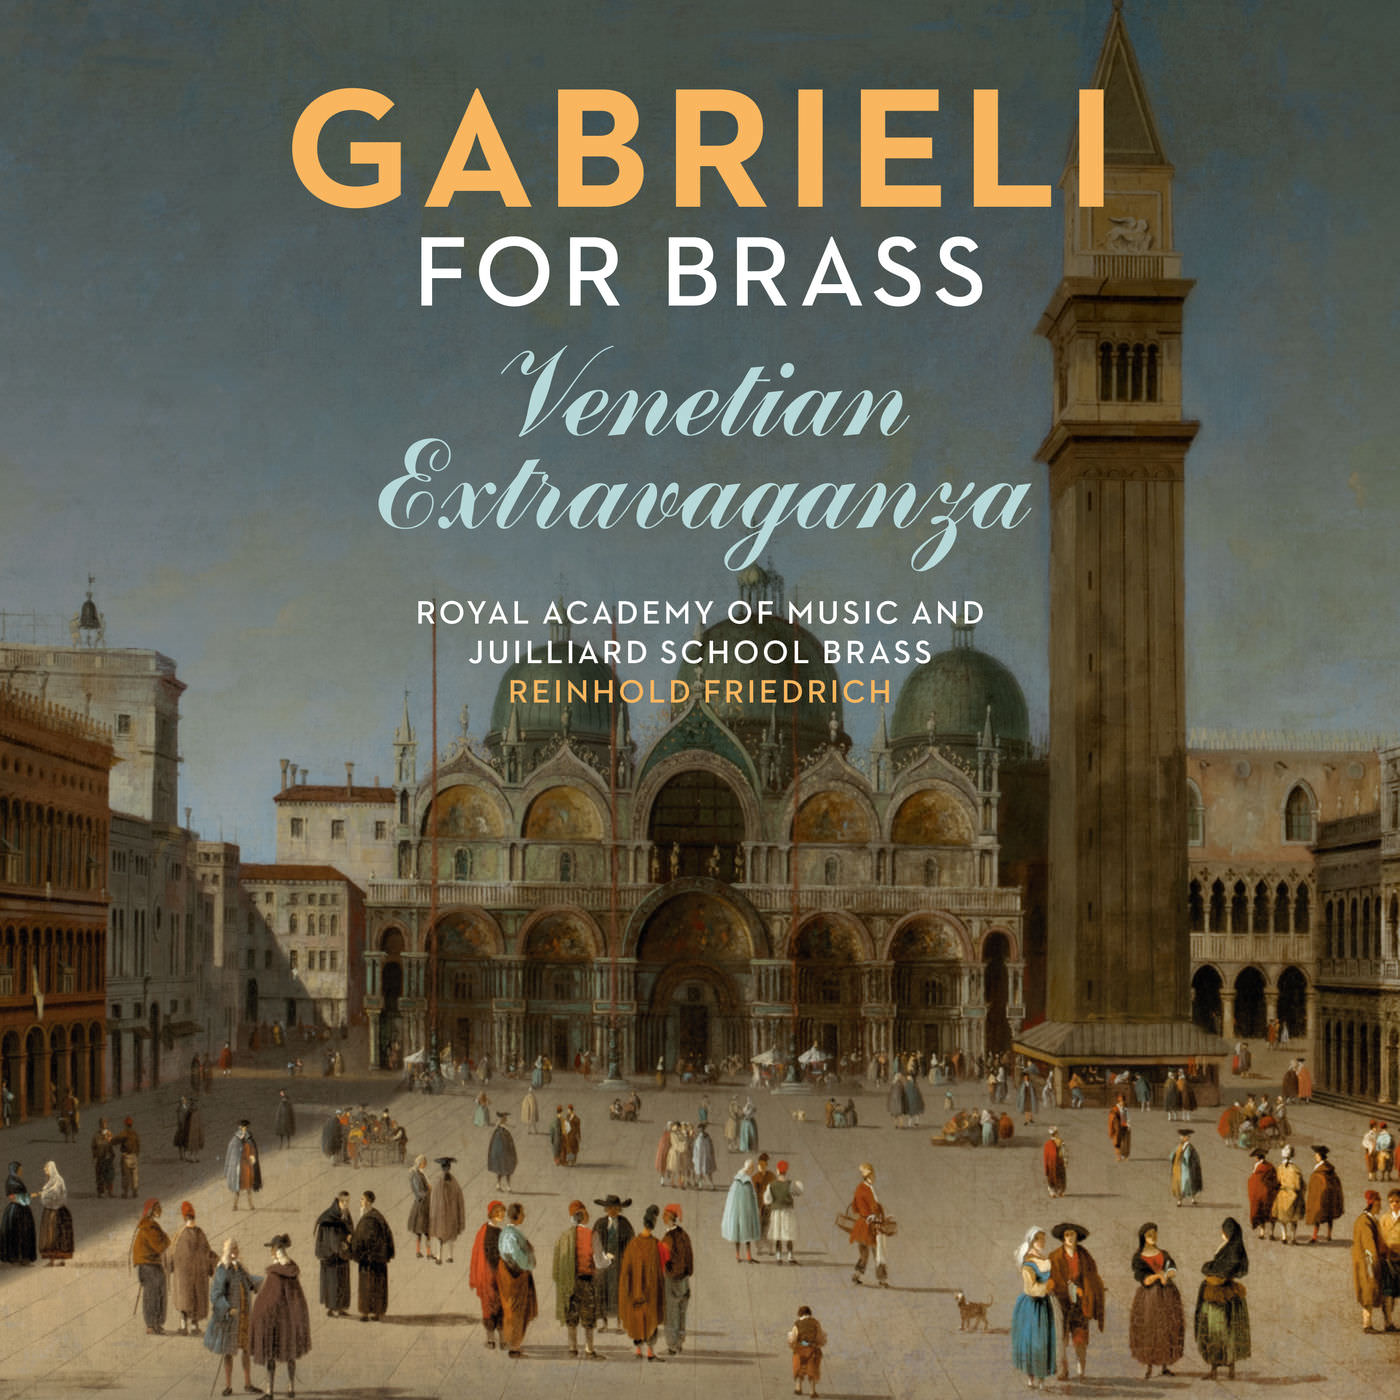 Royal Academy of Music & Juilliard School Brass - Gabrieli for Brass: Venetian Extravaganza (2018) [FLAC 24bit/192kHz]